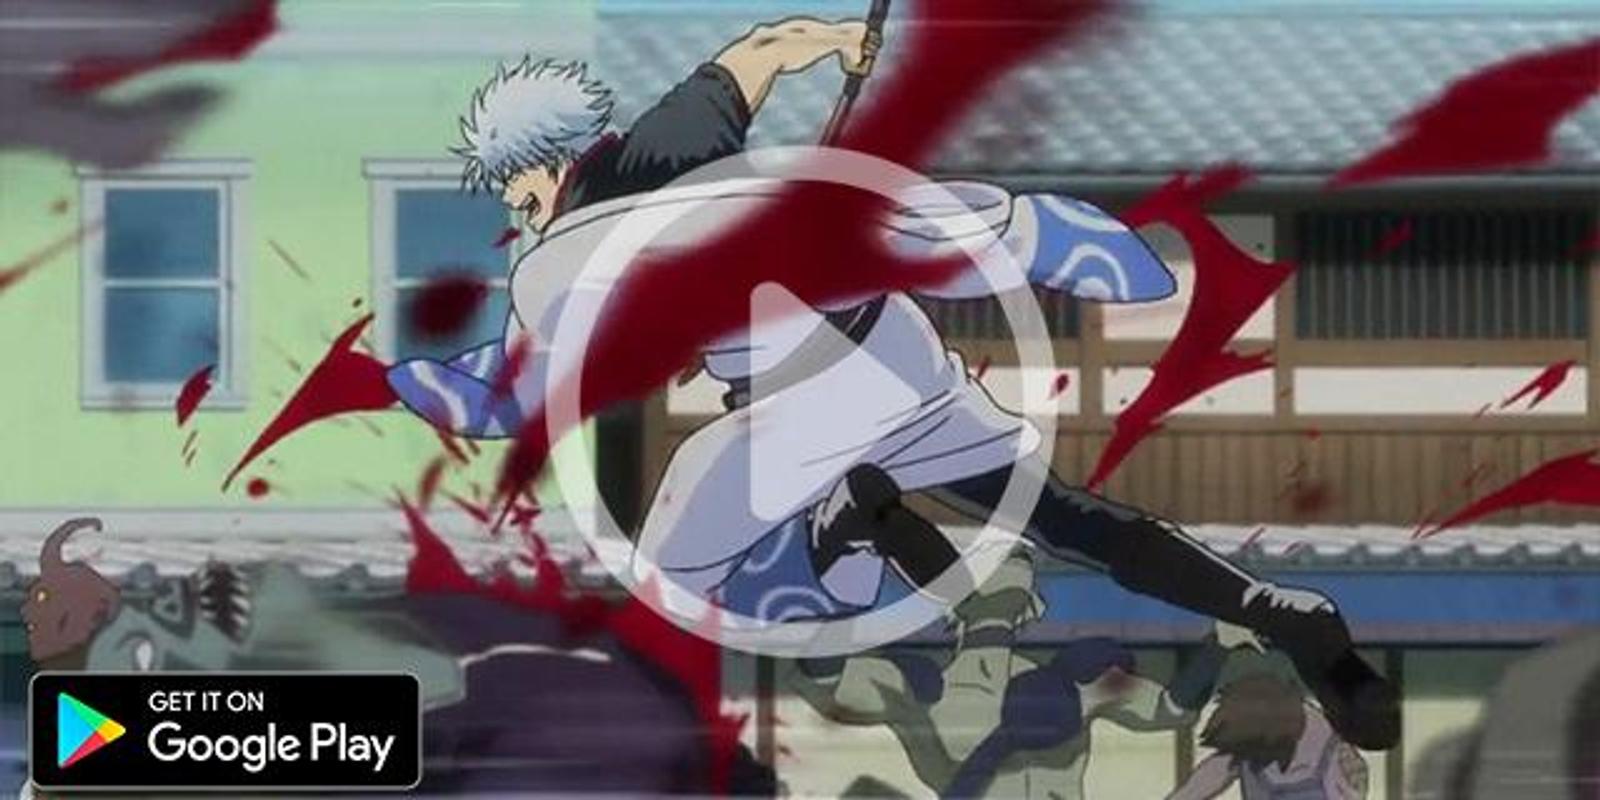 Koleksi Video Anime Gintama Terbaru For Android APK Download